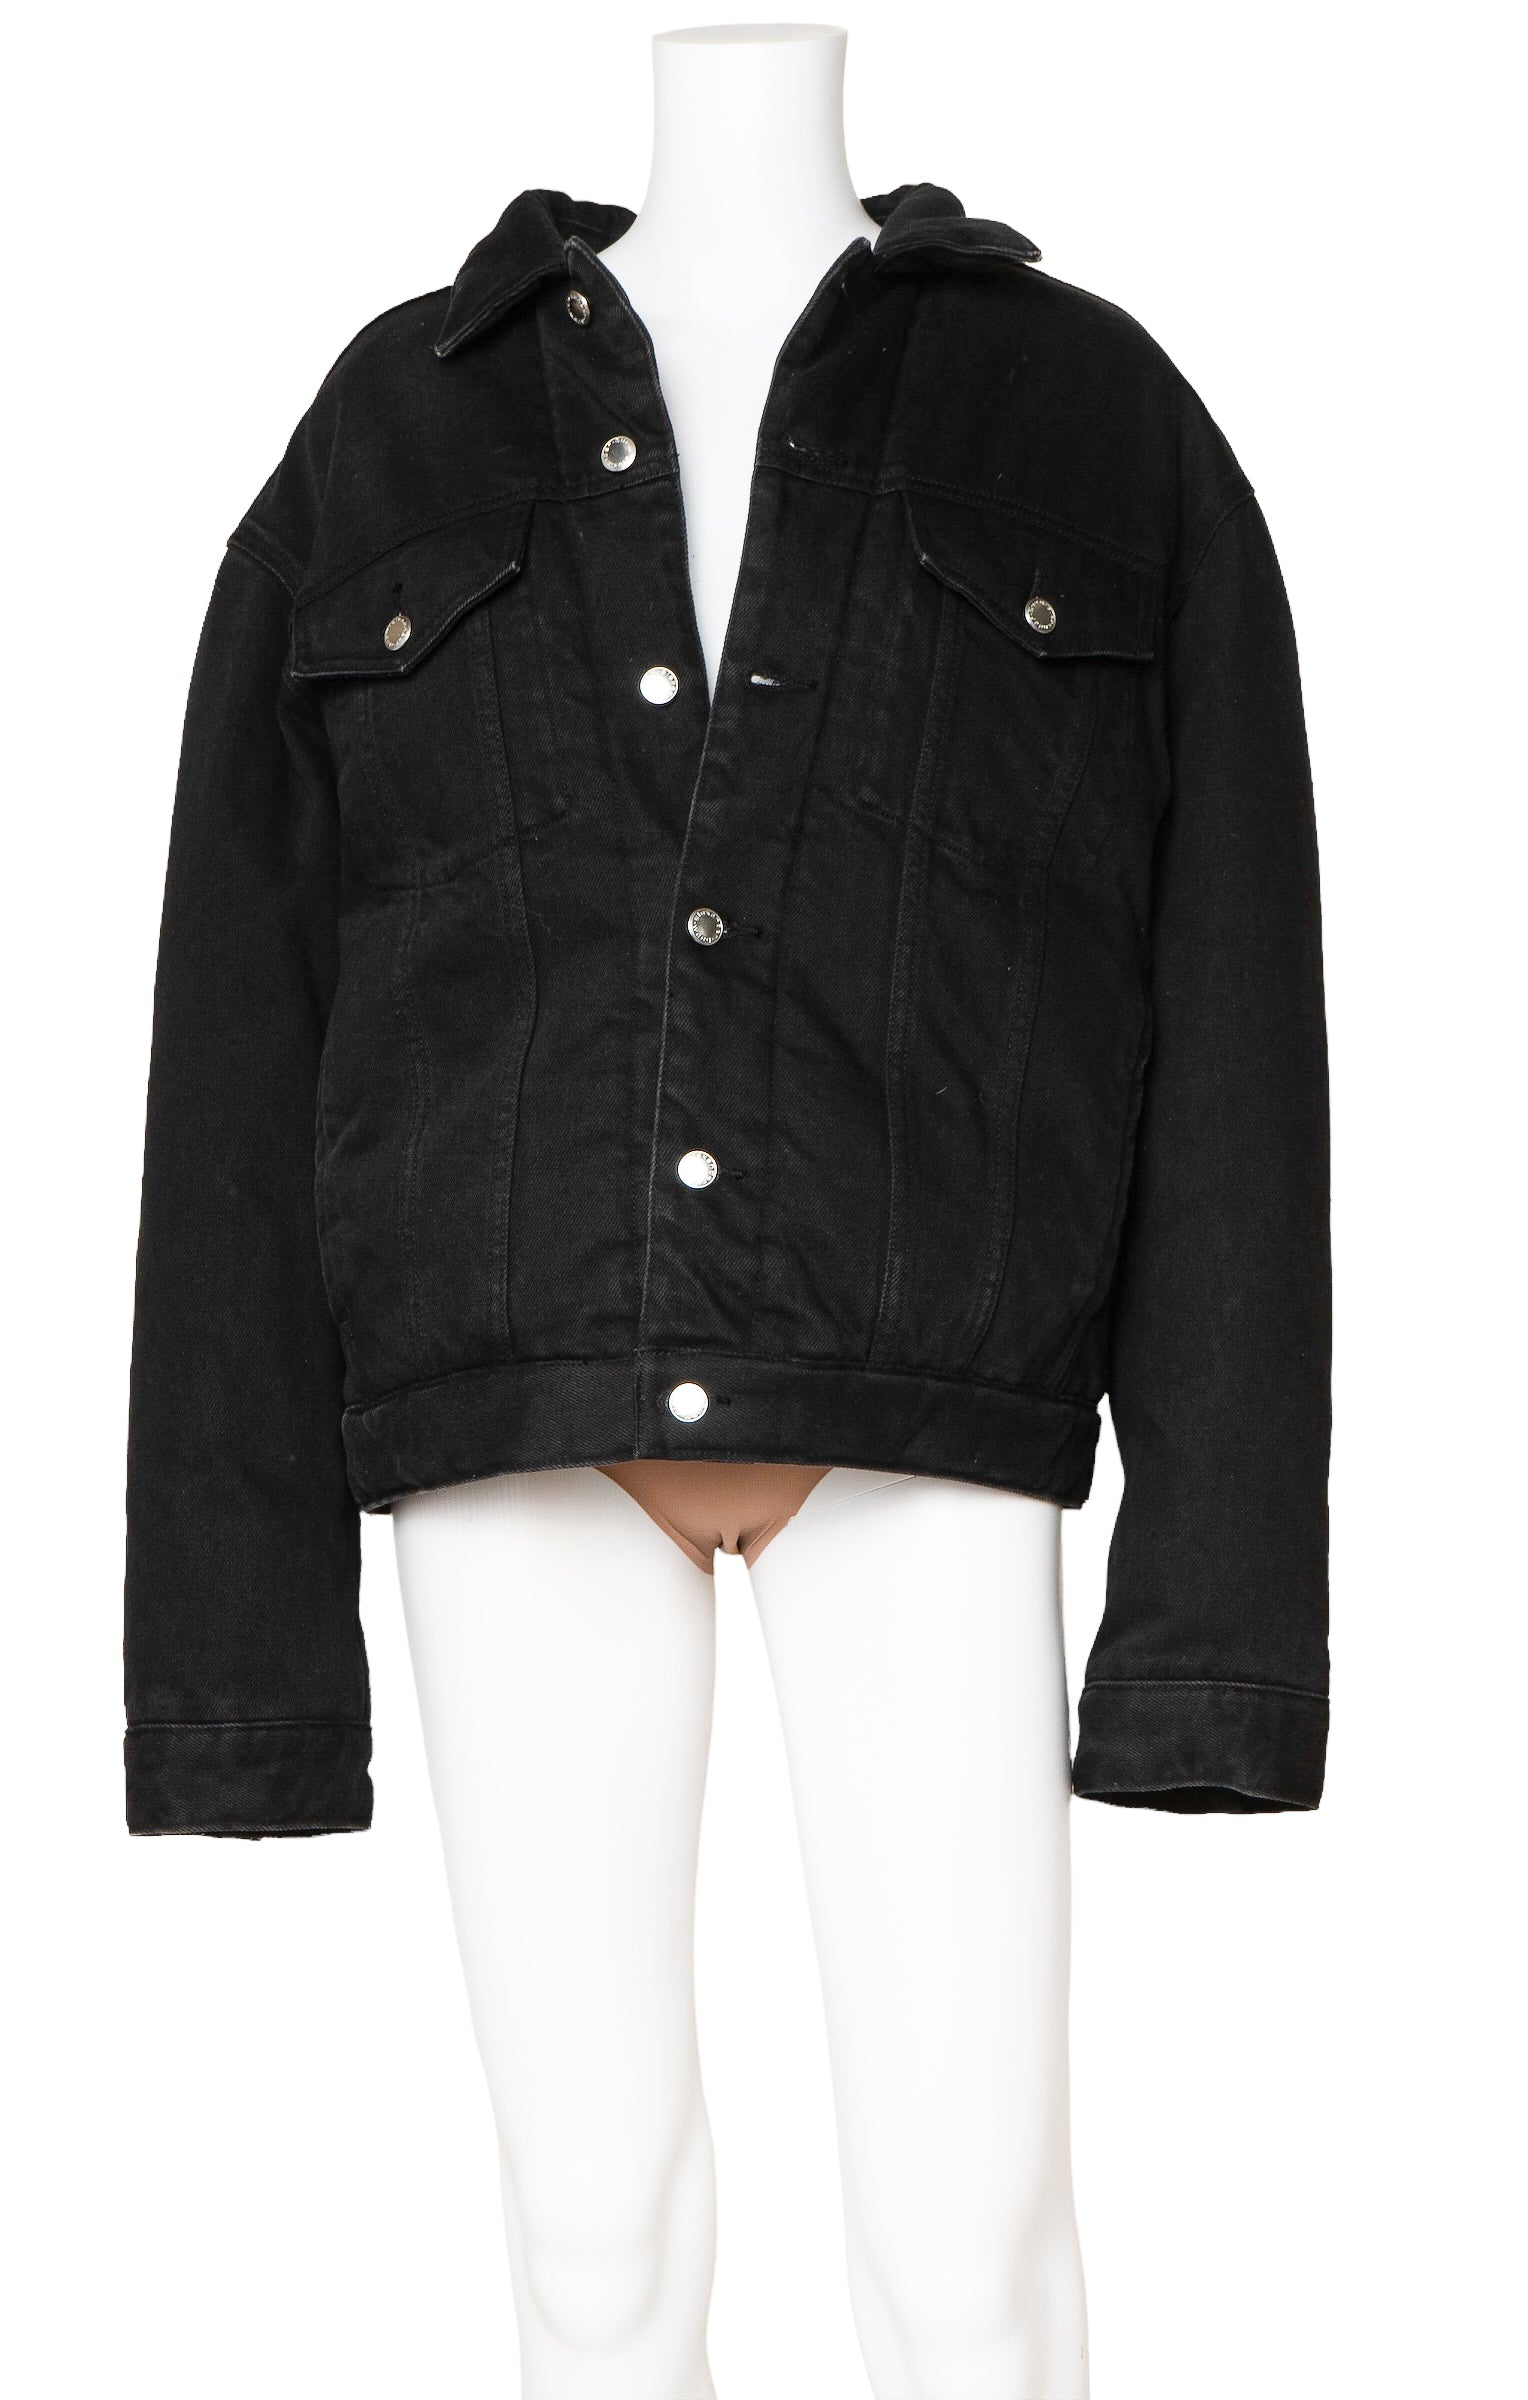 ALEXANDER WANG (RARE) Jacket Size: No size tags, fits like M/L